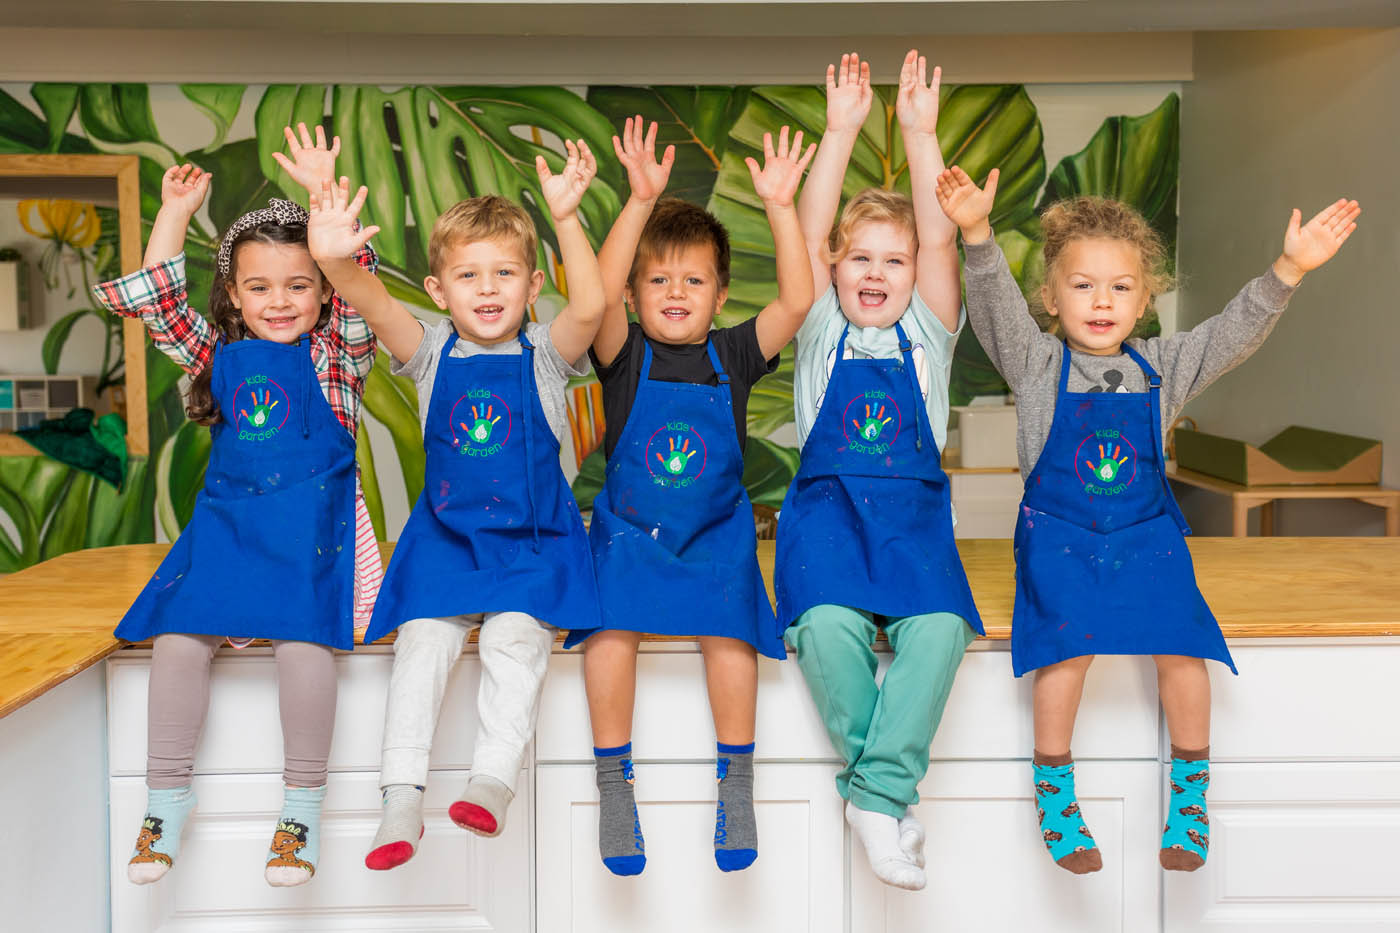 Kids in blue aprons at Kids Garden Summerville learning center.